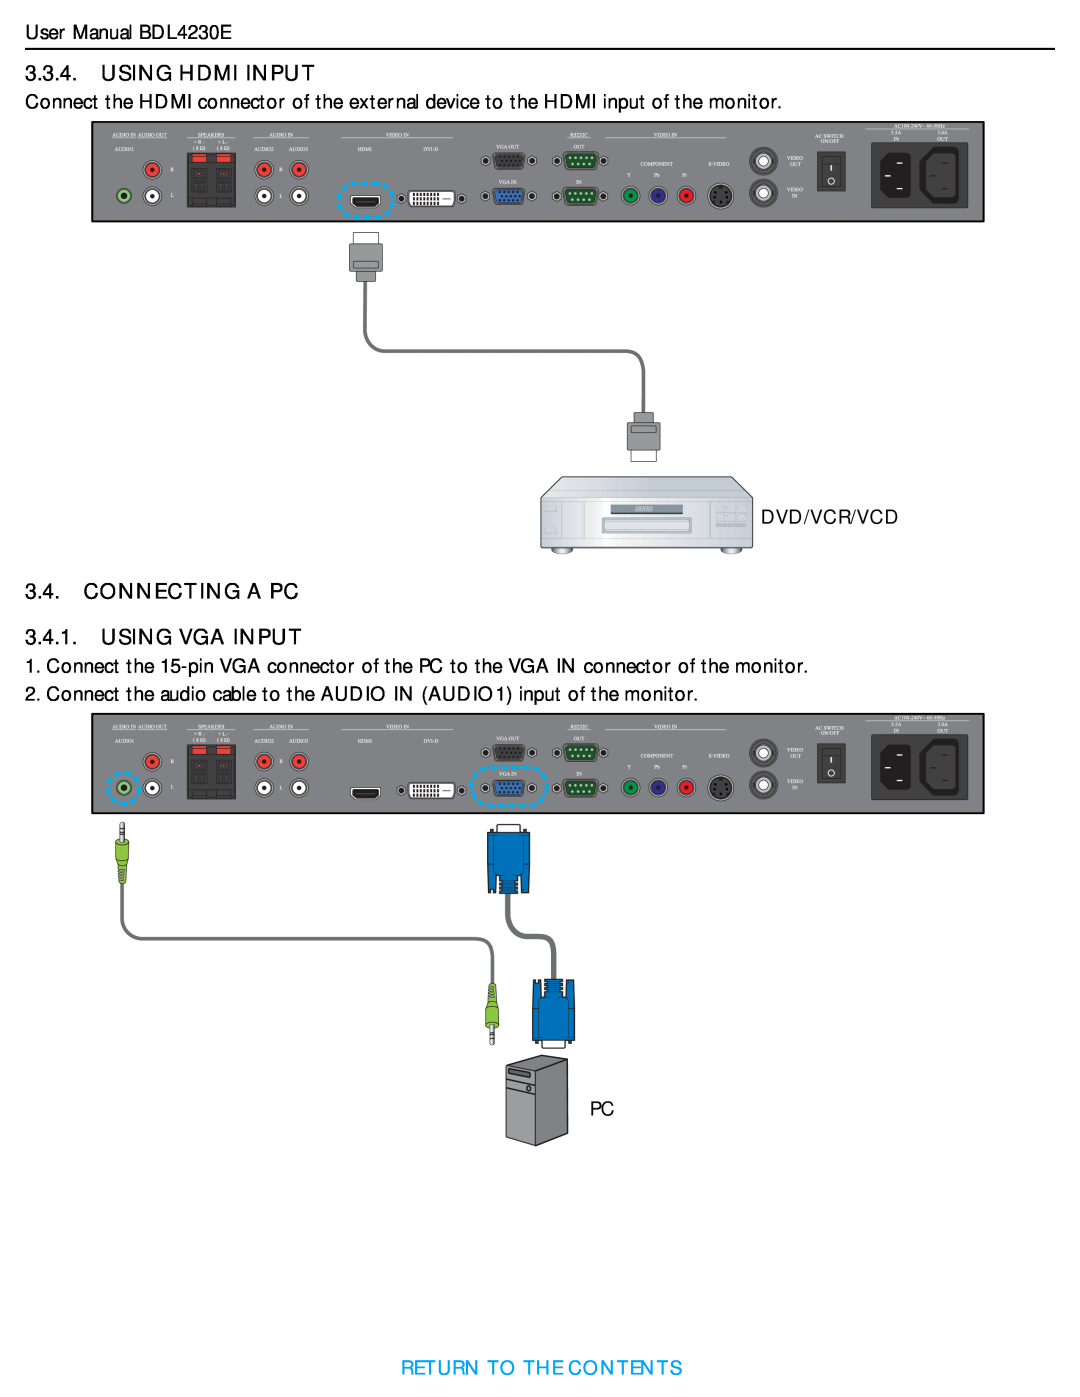 Philips user manual Using Hdmi Input, CONNECTING A PC 3.4.1. USING VGA INPUT, User Manual BDL4230E, Dvd/Vcr/Vcd 